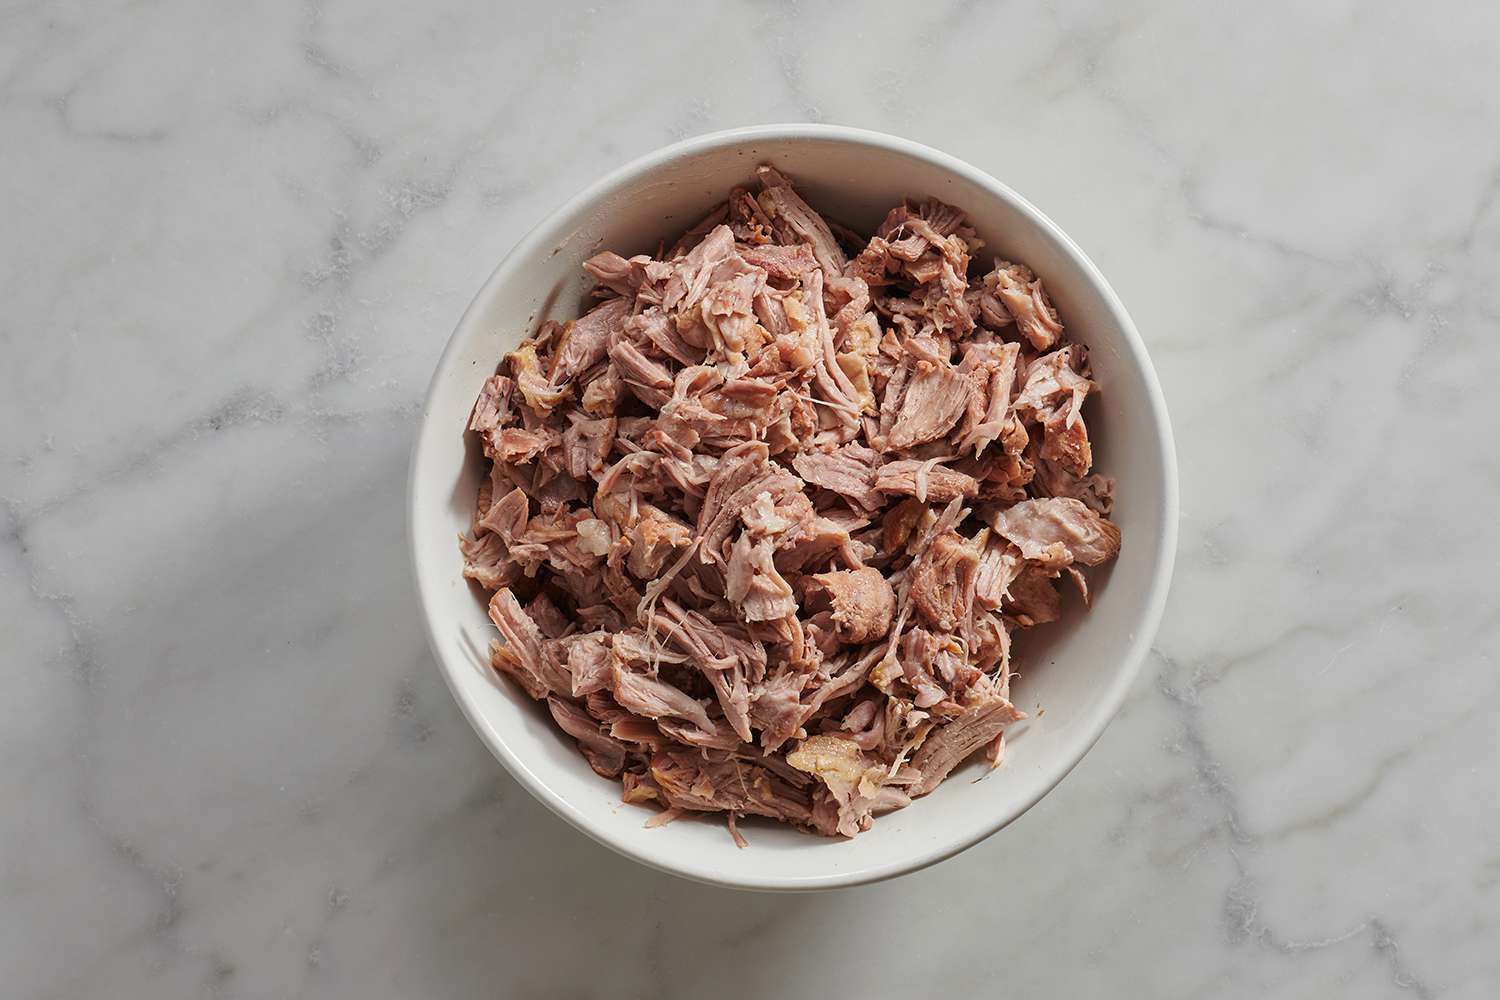 shredded pork meat in a bowl